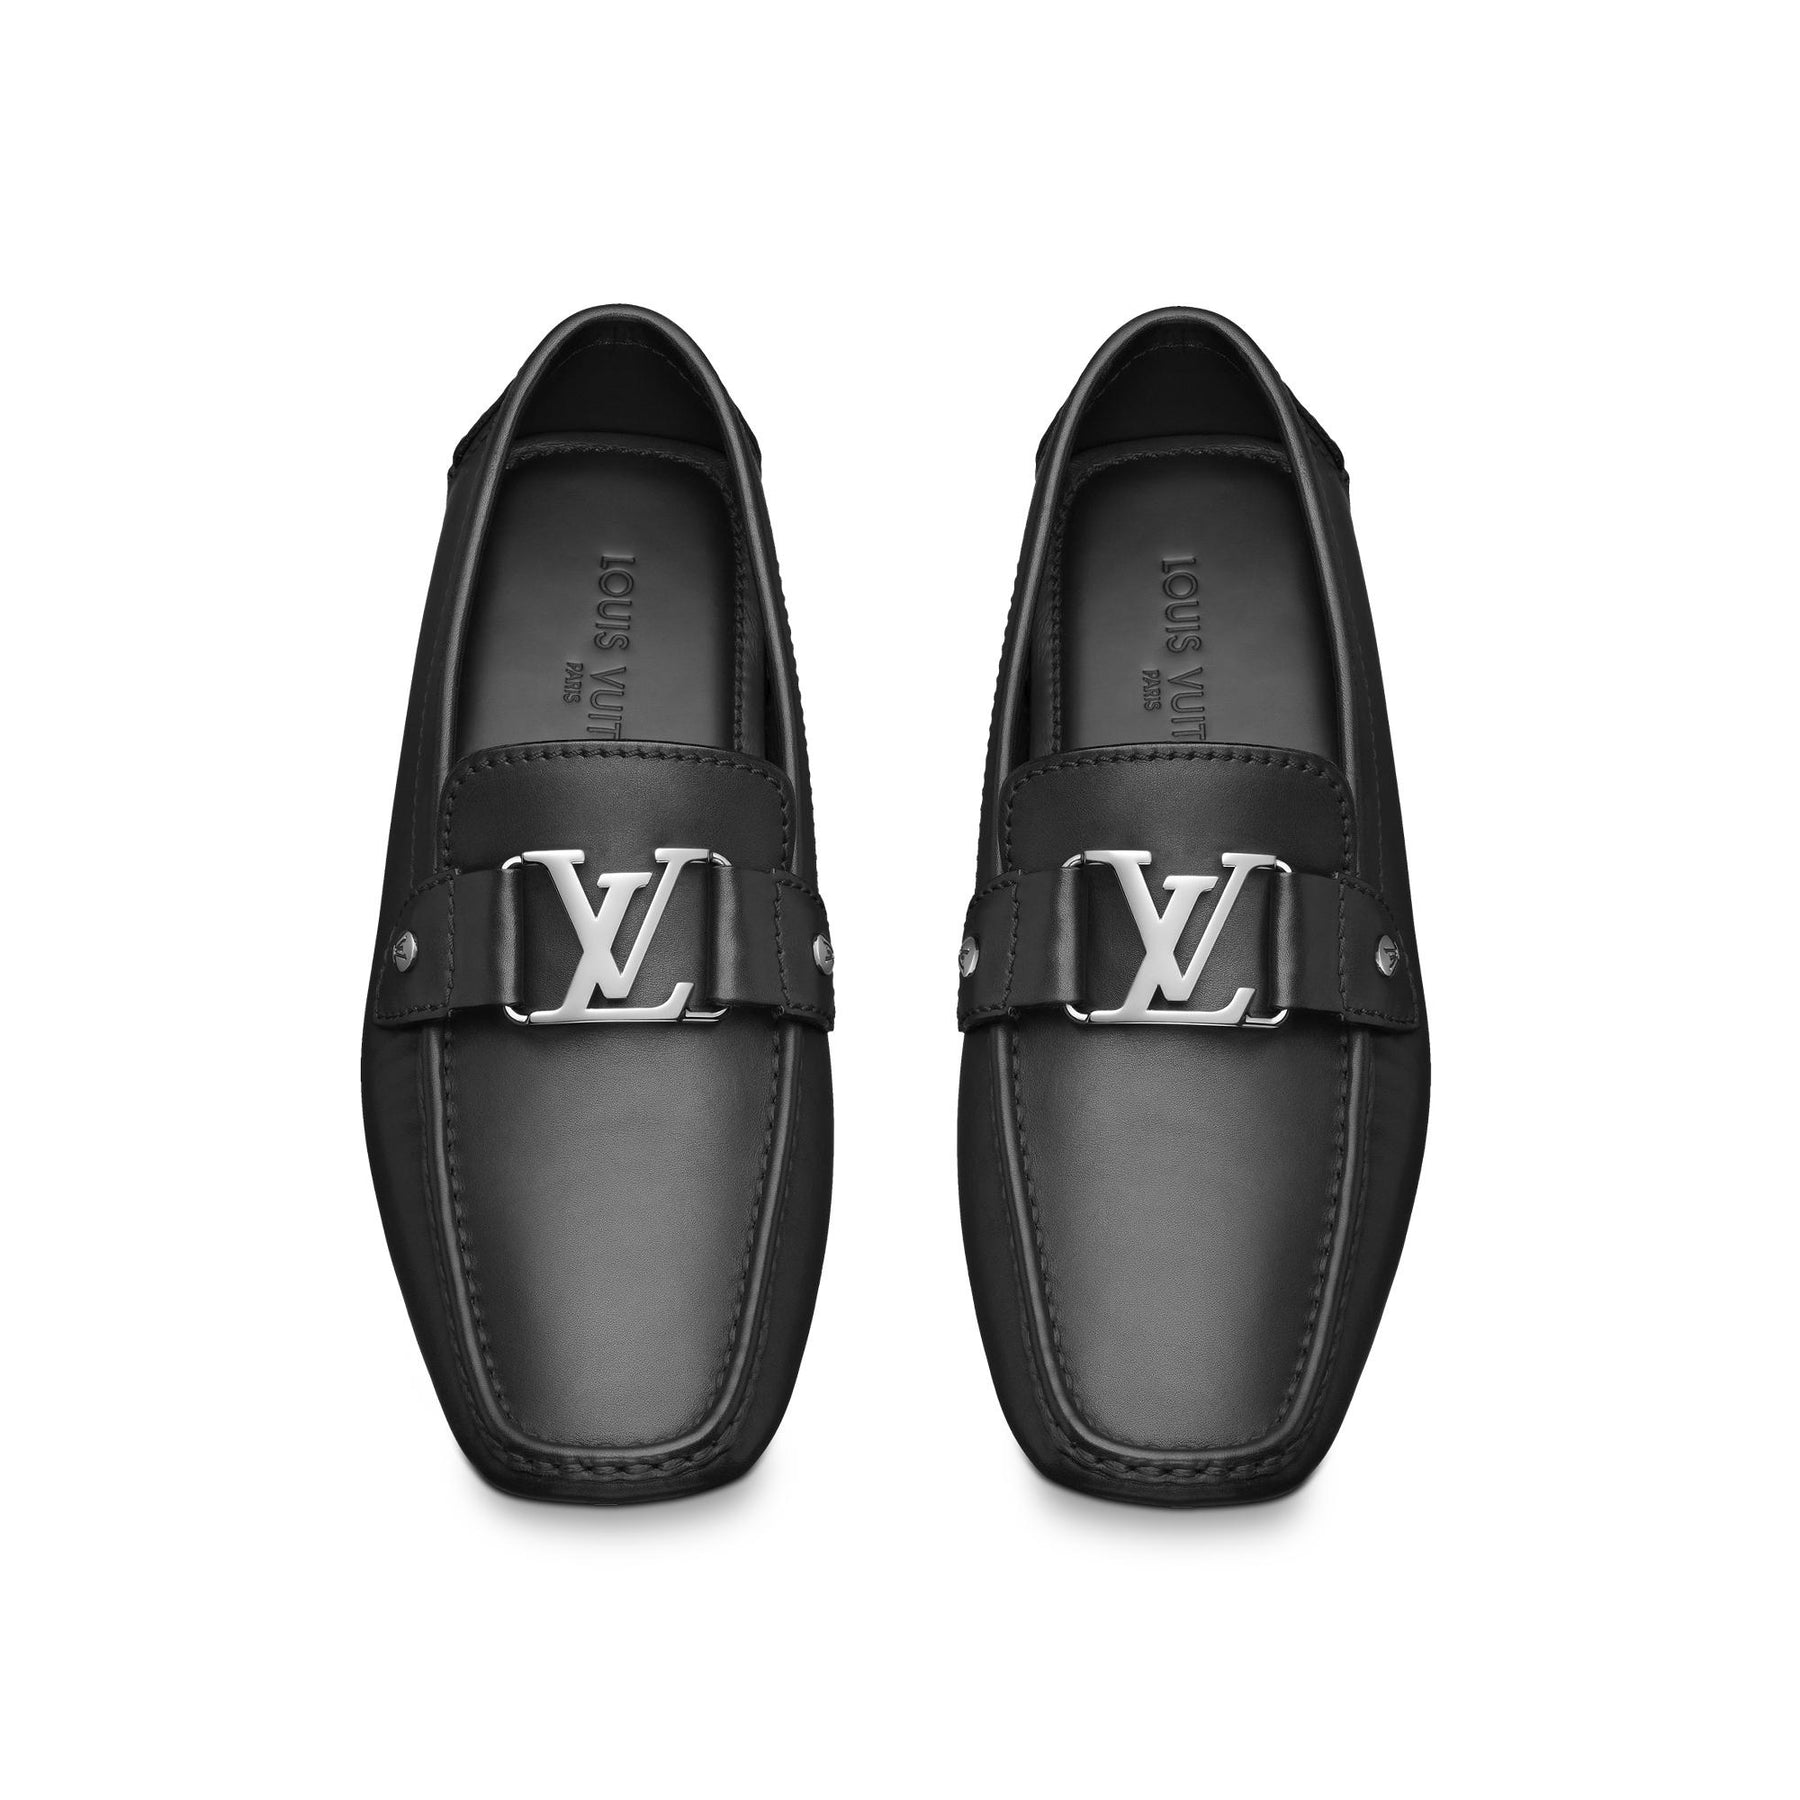 LOUIS VUITTON Dark Brown Monte Carlo Moccasins Driving Shoes